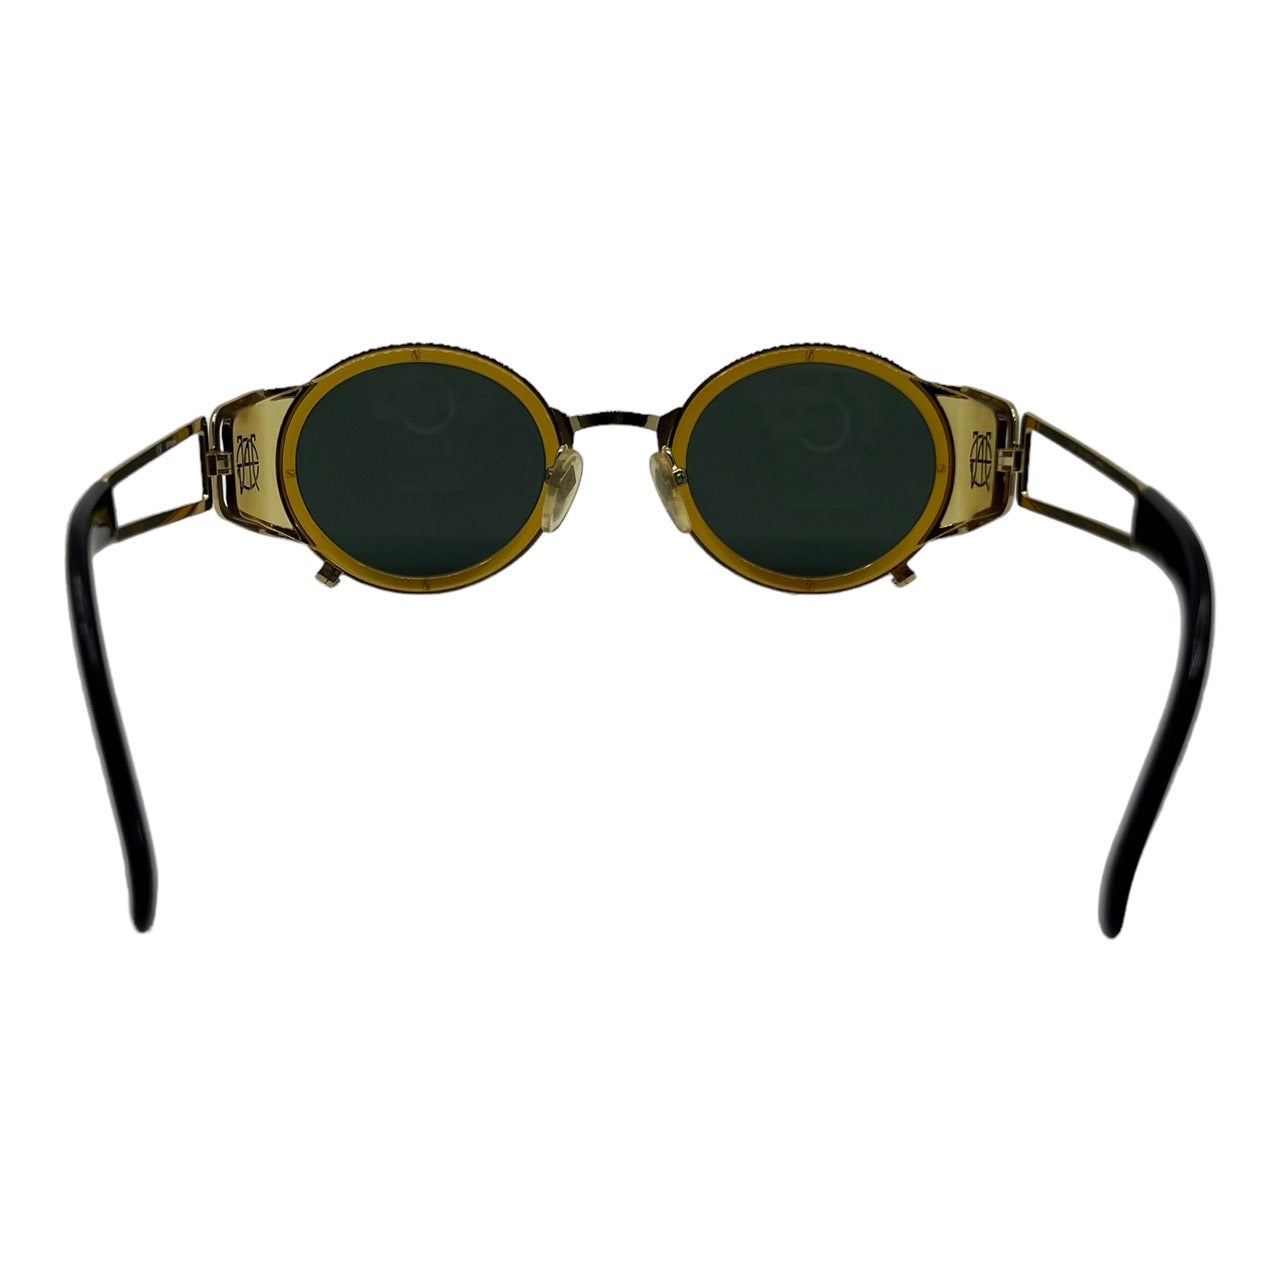 Jean Paul GAULTIER(ジャンポールゴルチエ) 90's ”JPG” logo sunglasses/ロゴサングラス 58-5201  ゴールド 90年代